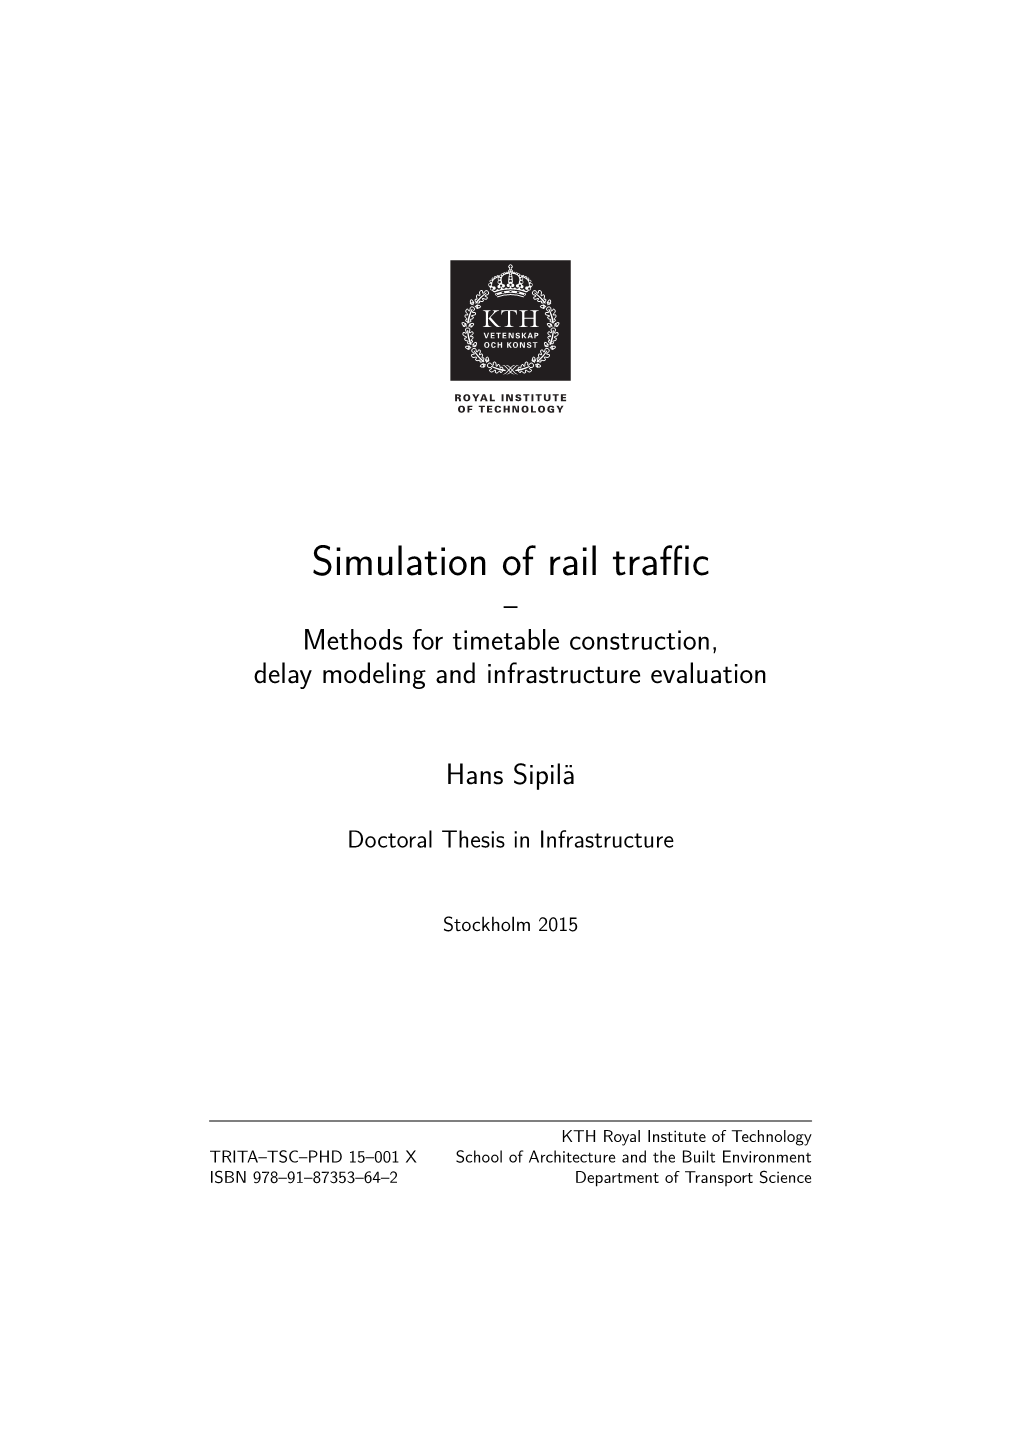 Simulation of Rail Traffic